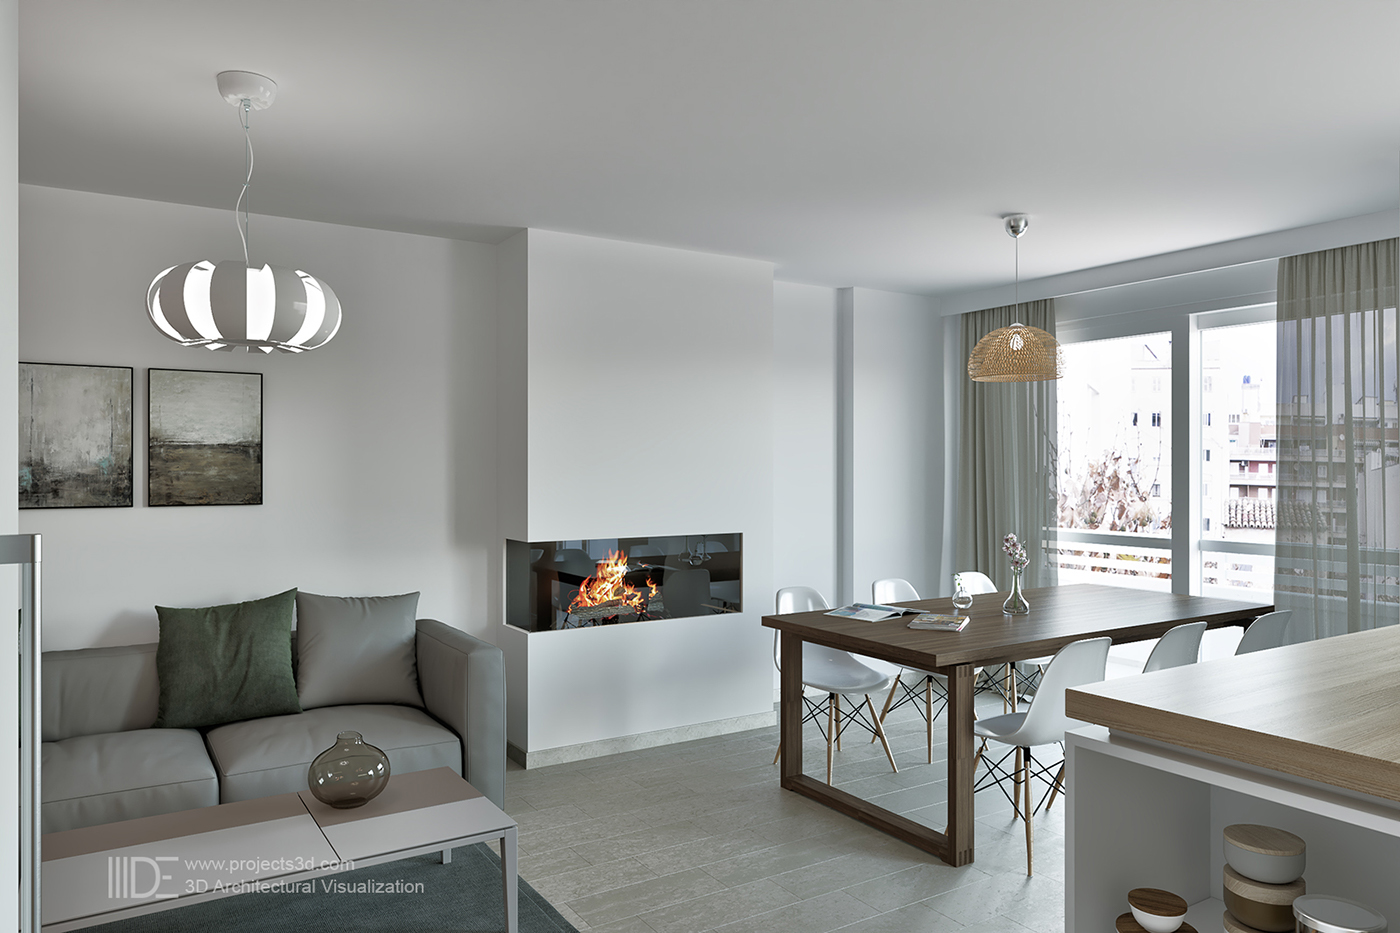 apartment design Interior 3D architectural visualization 3dsmax vray